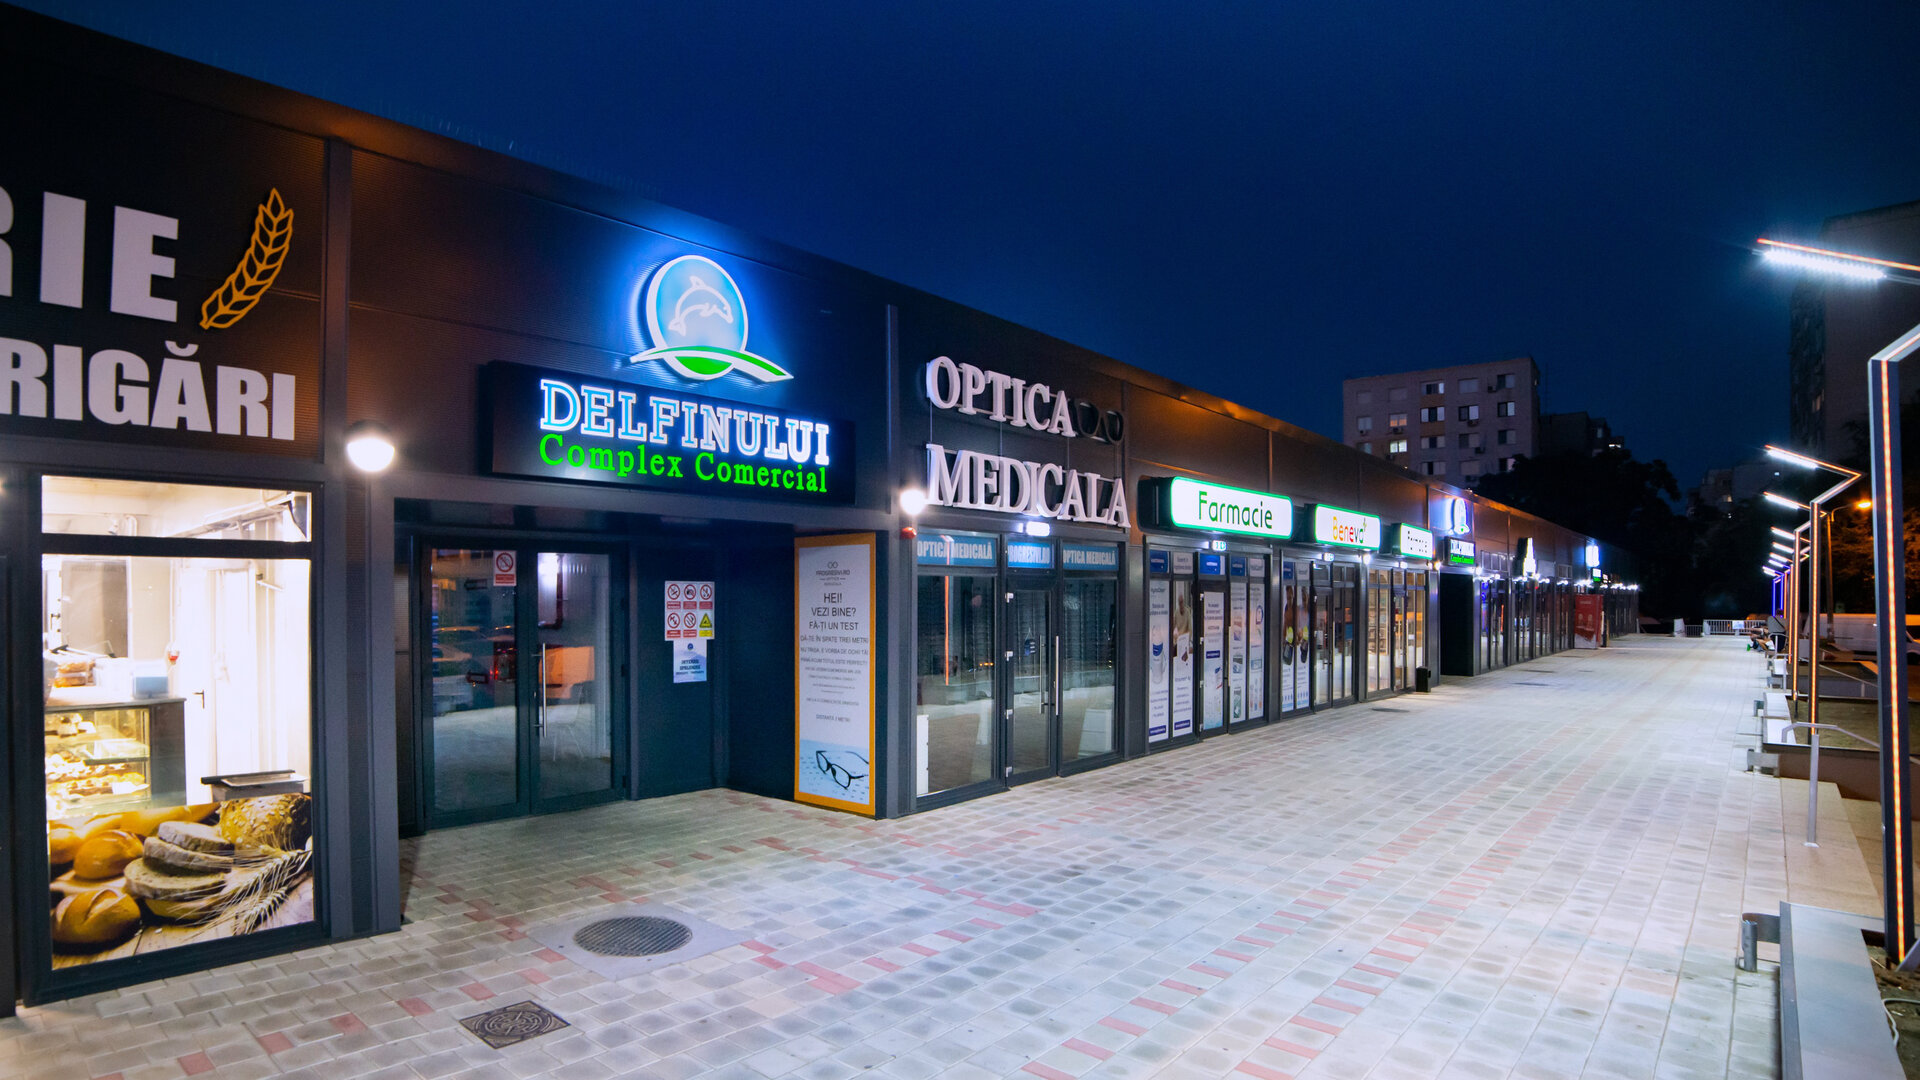 The Delfinului Market: Modernization, interior reconfiguration, expansion, façade remodeling, and structural steel reinforcement